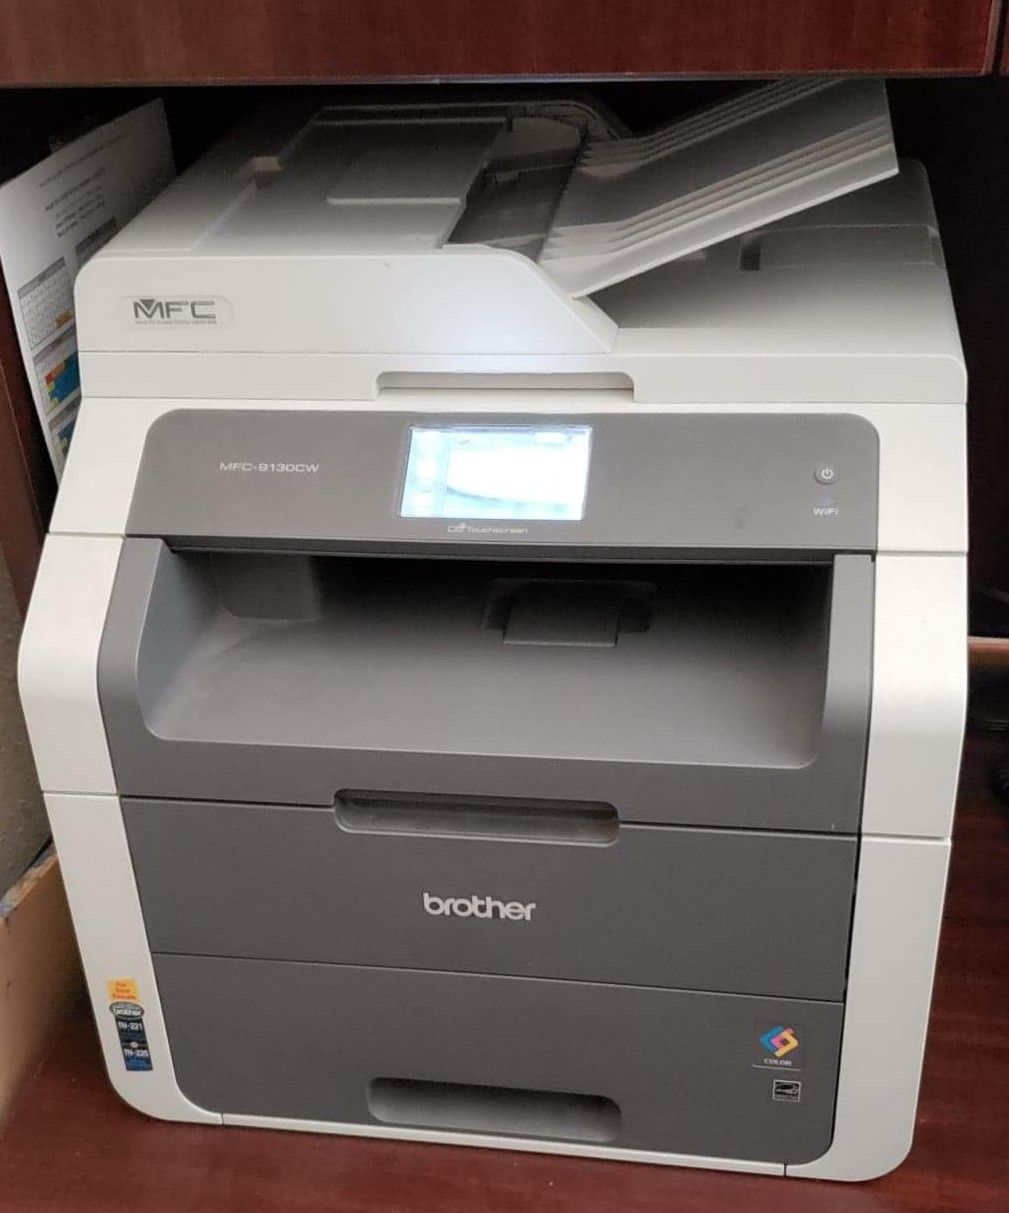 Broder MFC-9130cw Printer